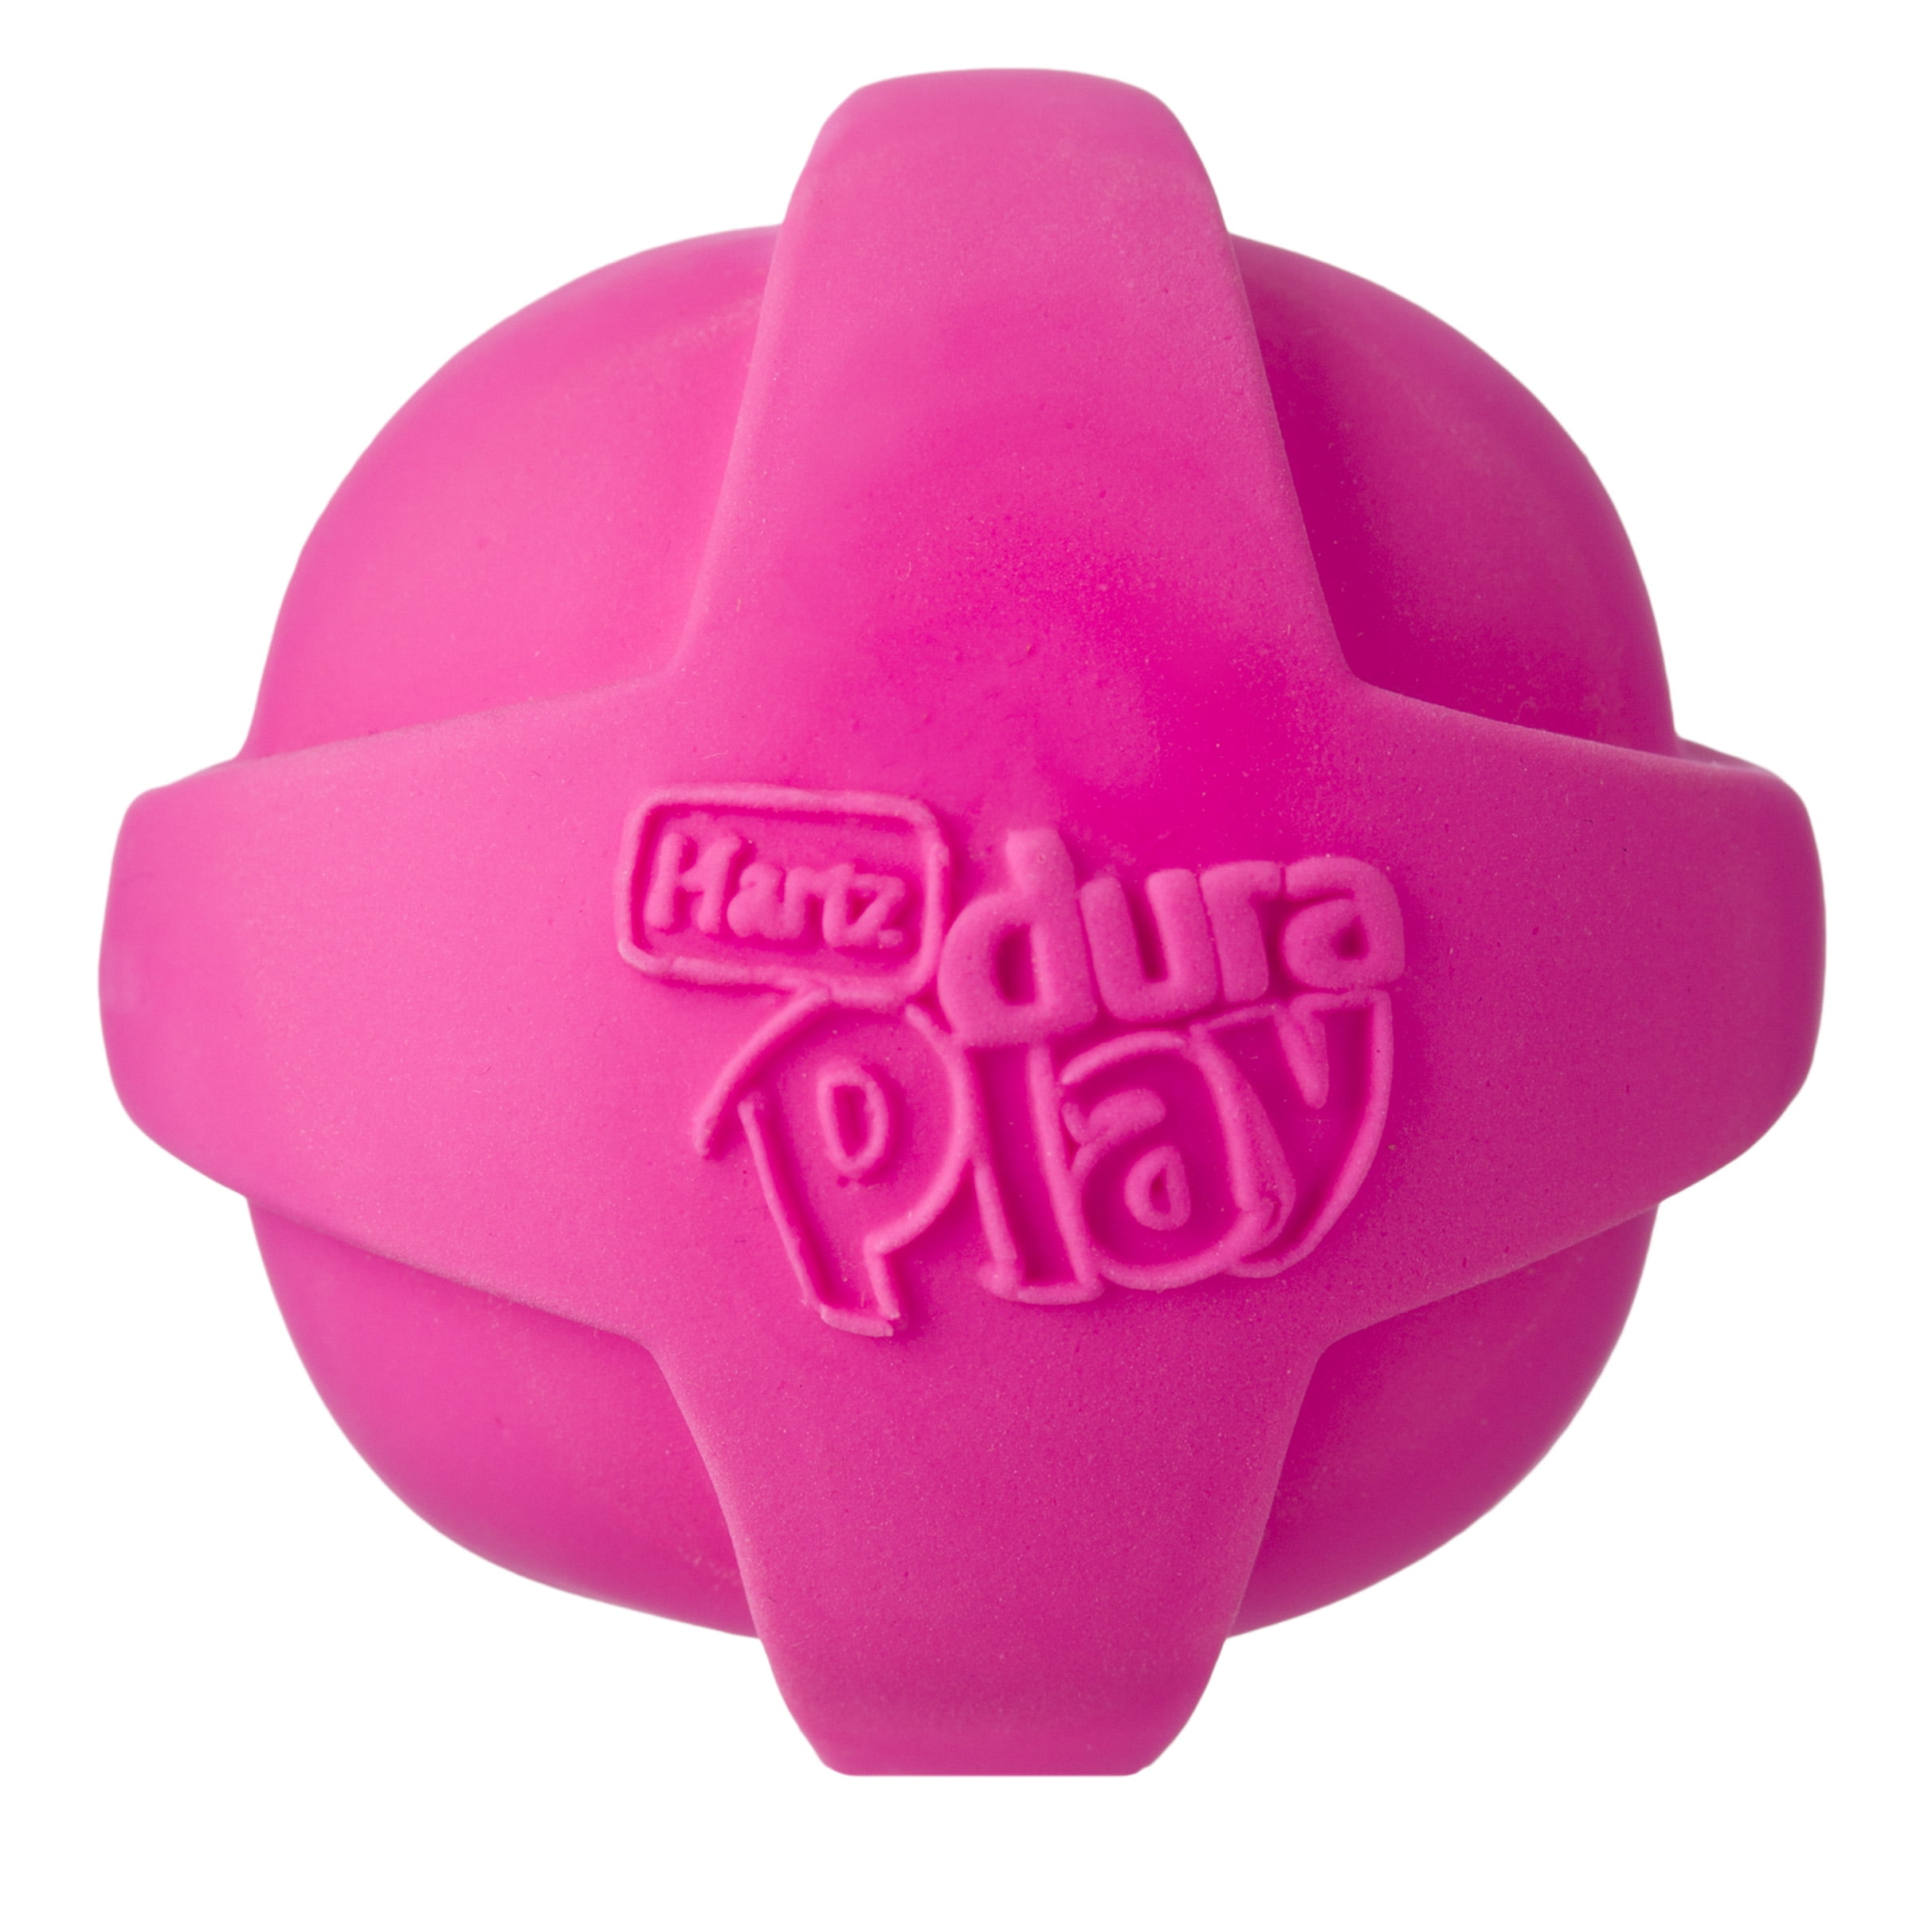 Petbobi Dog Interactive Toys Plush Giggle Ball Squeak Toy for Pets, 3-Eye  Pink 